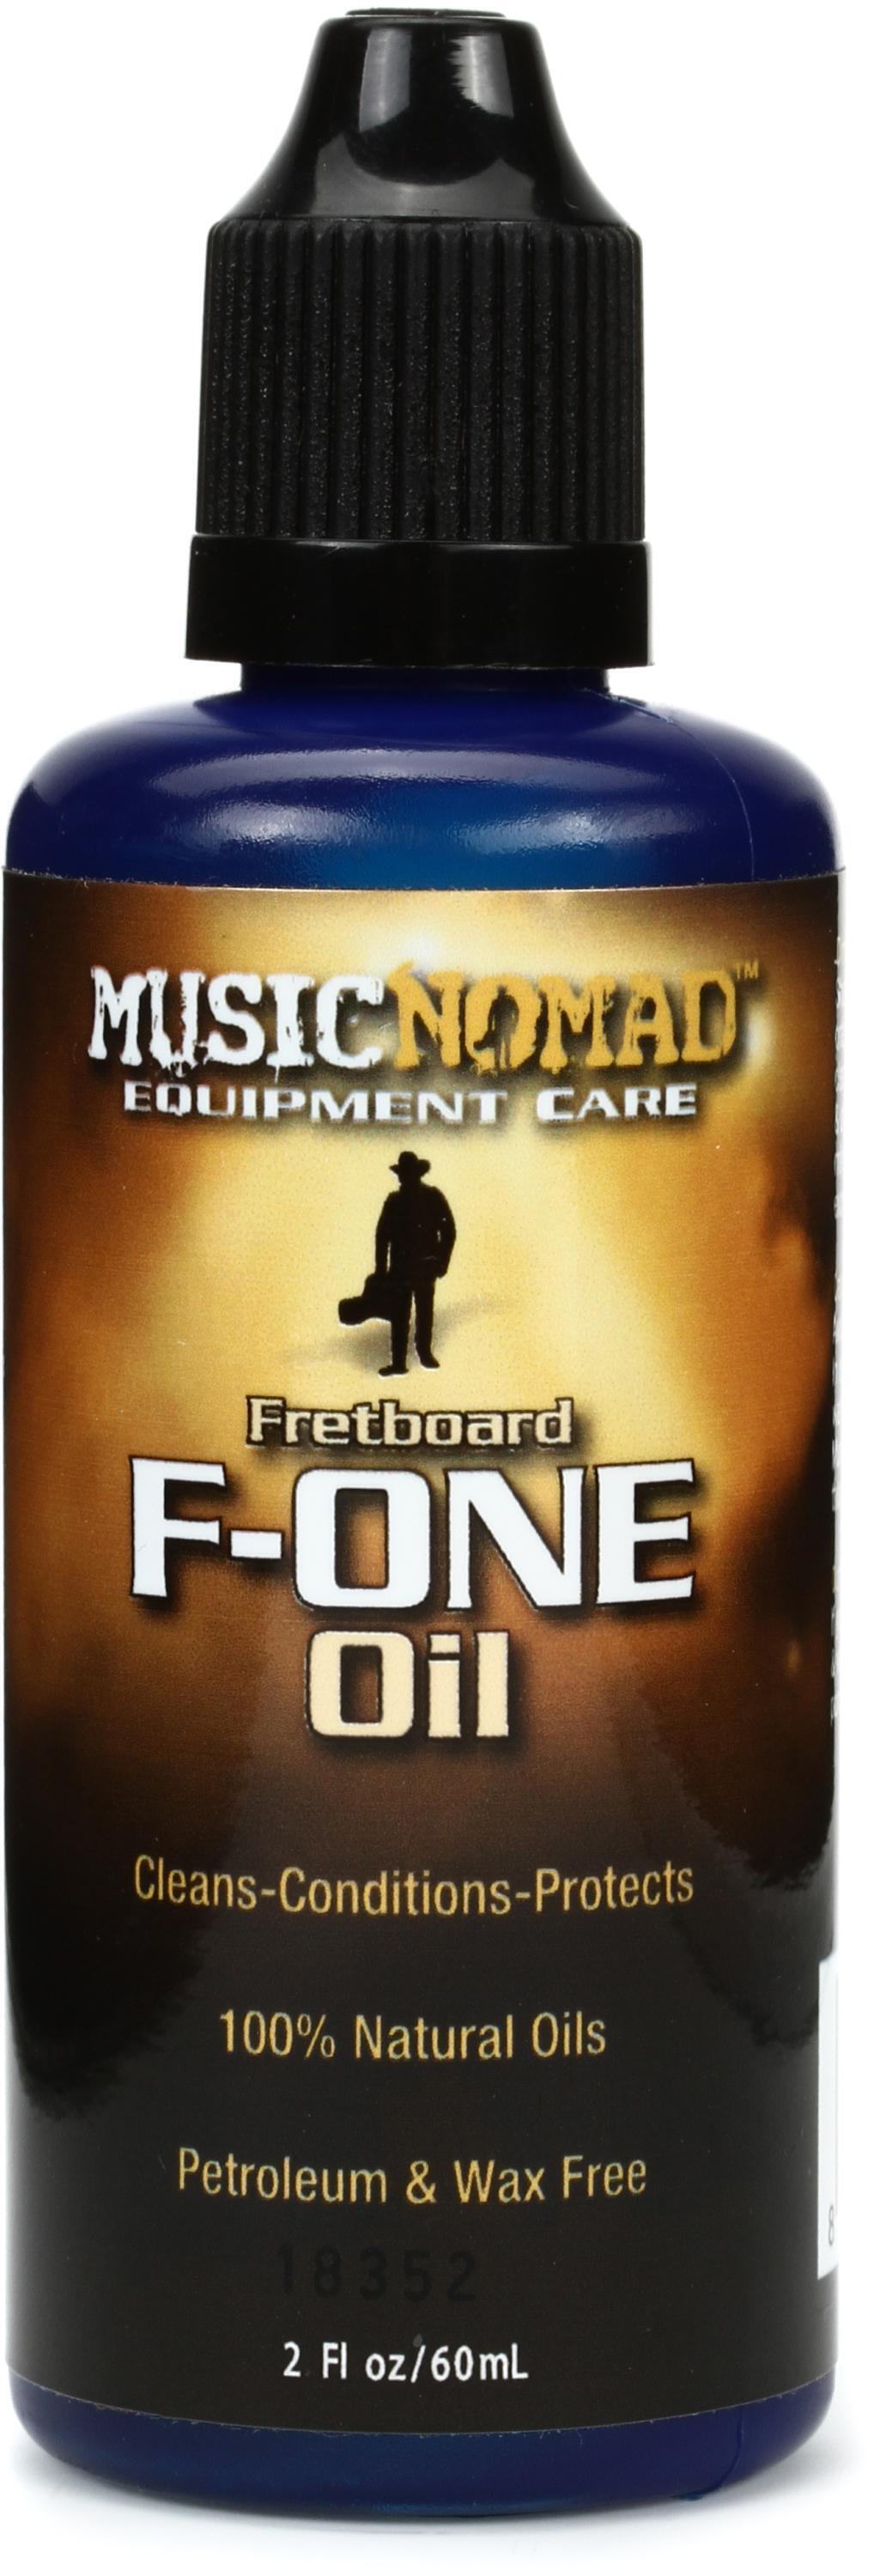 Guitar Fretboard Oil Fretboard Cleaner For Guitar Deep Cleaning Guitar Oil  And Cleaner For Fretboard And Fingerboard - AliExpress